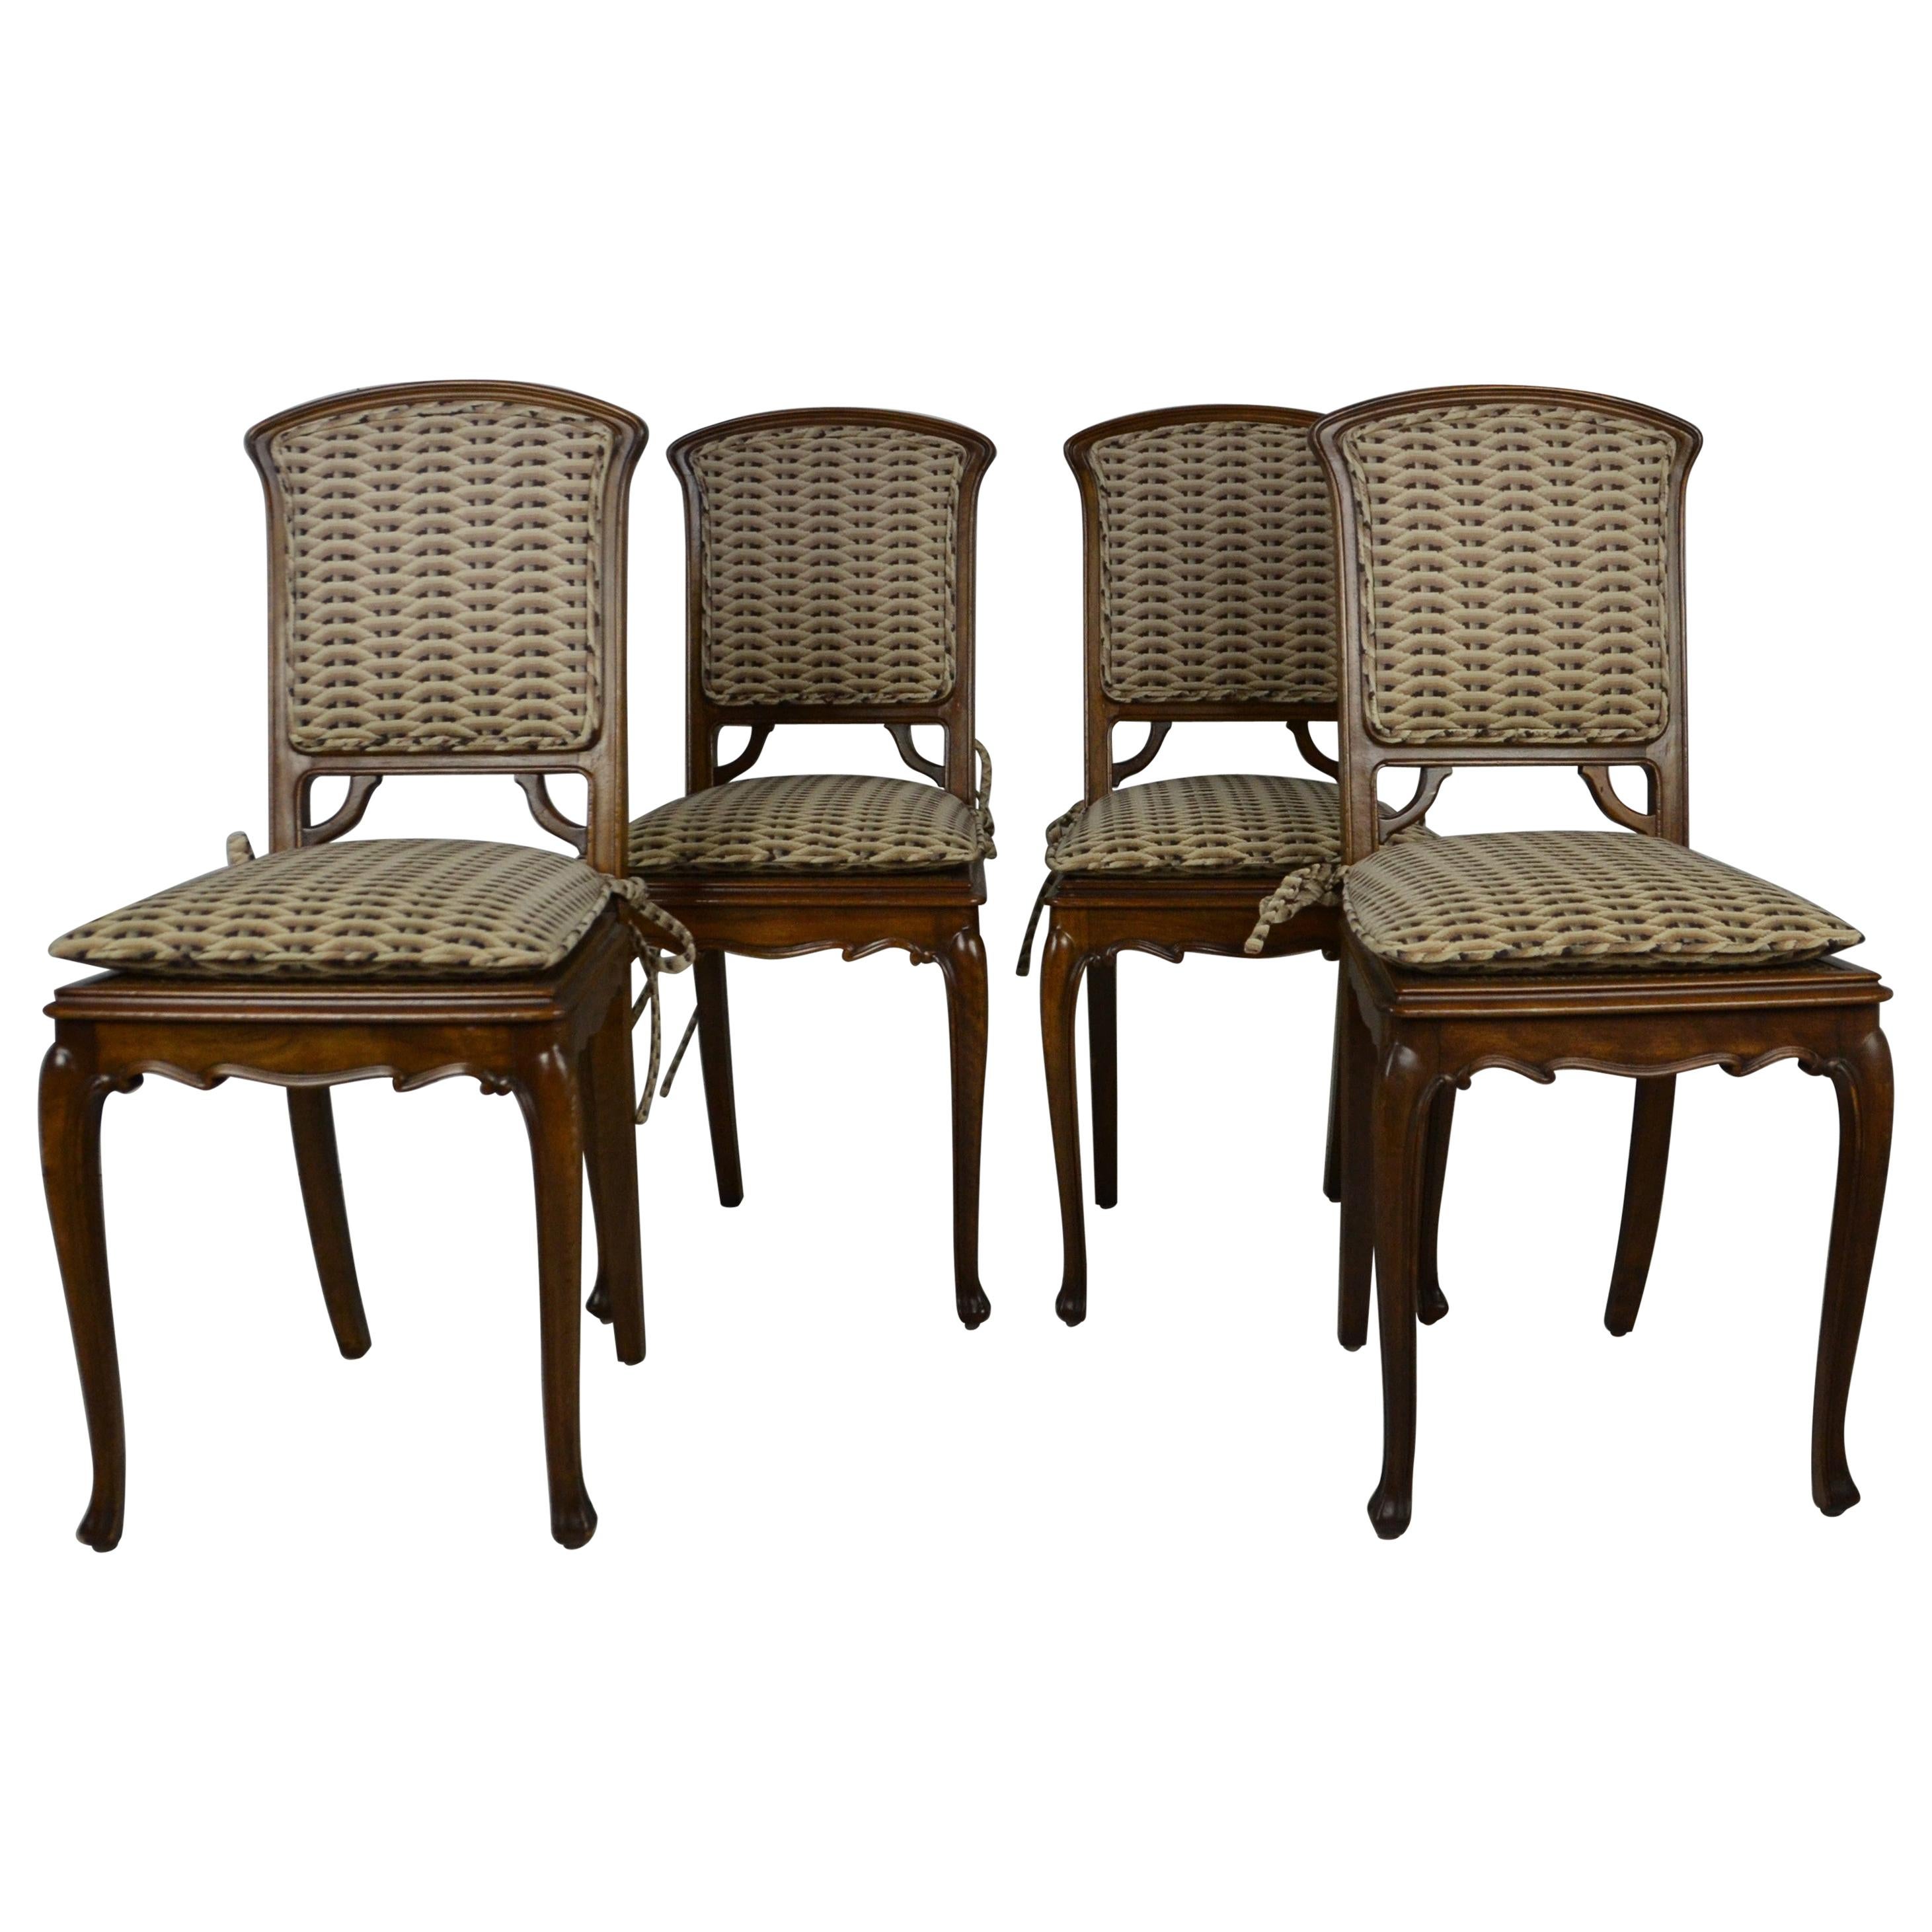 Set of 4 Cabriole Leg Chairs with Art Nouveau Backs